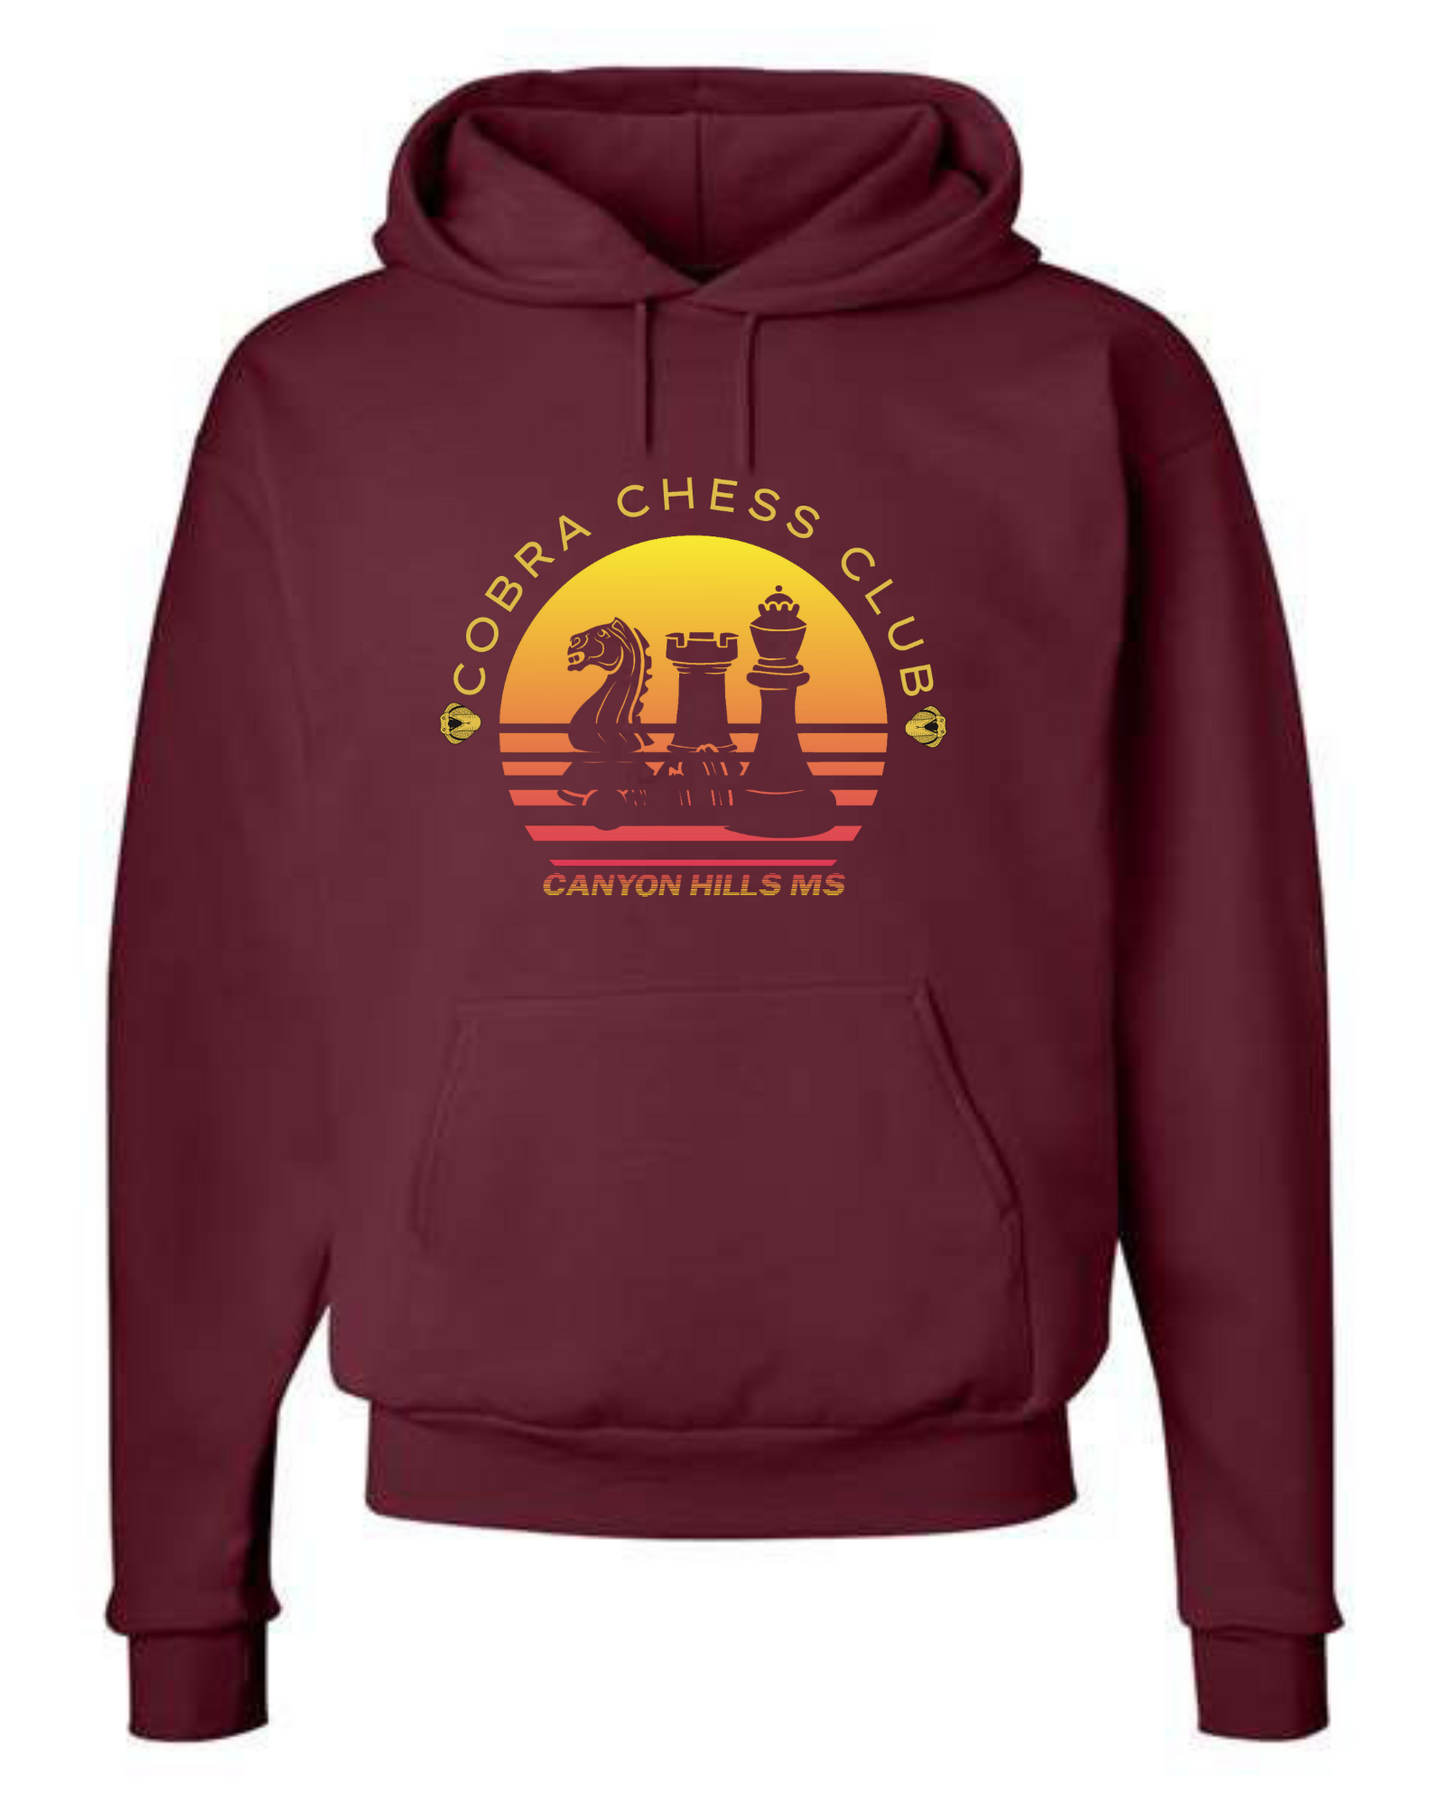 CHMS Cobra Chess club hoodie